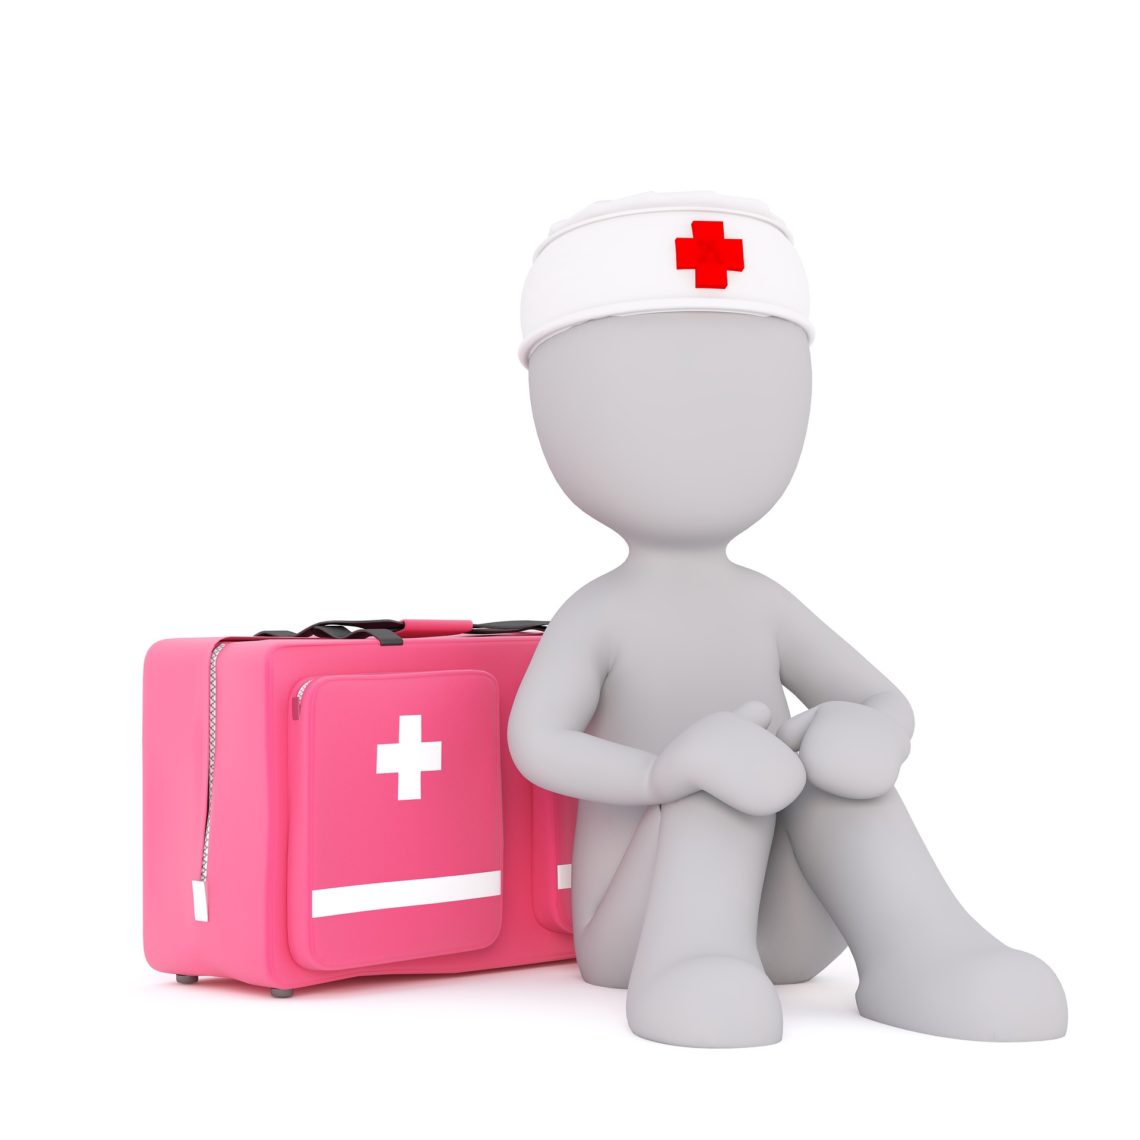 First Aid - Nurses Revision